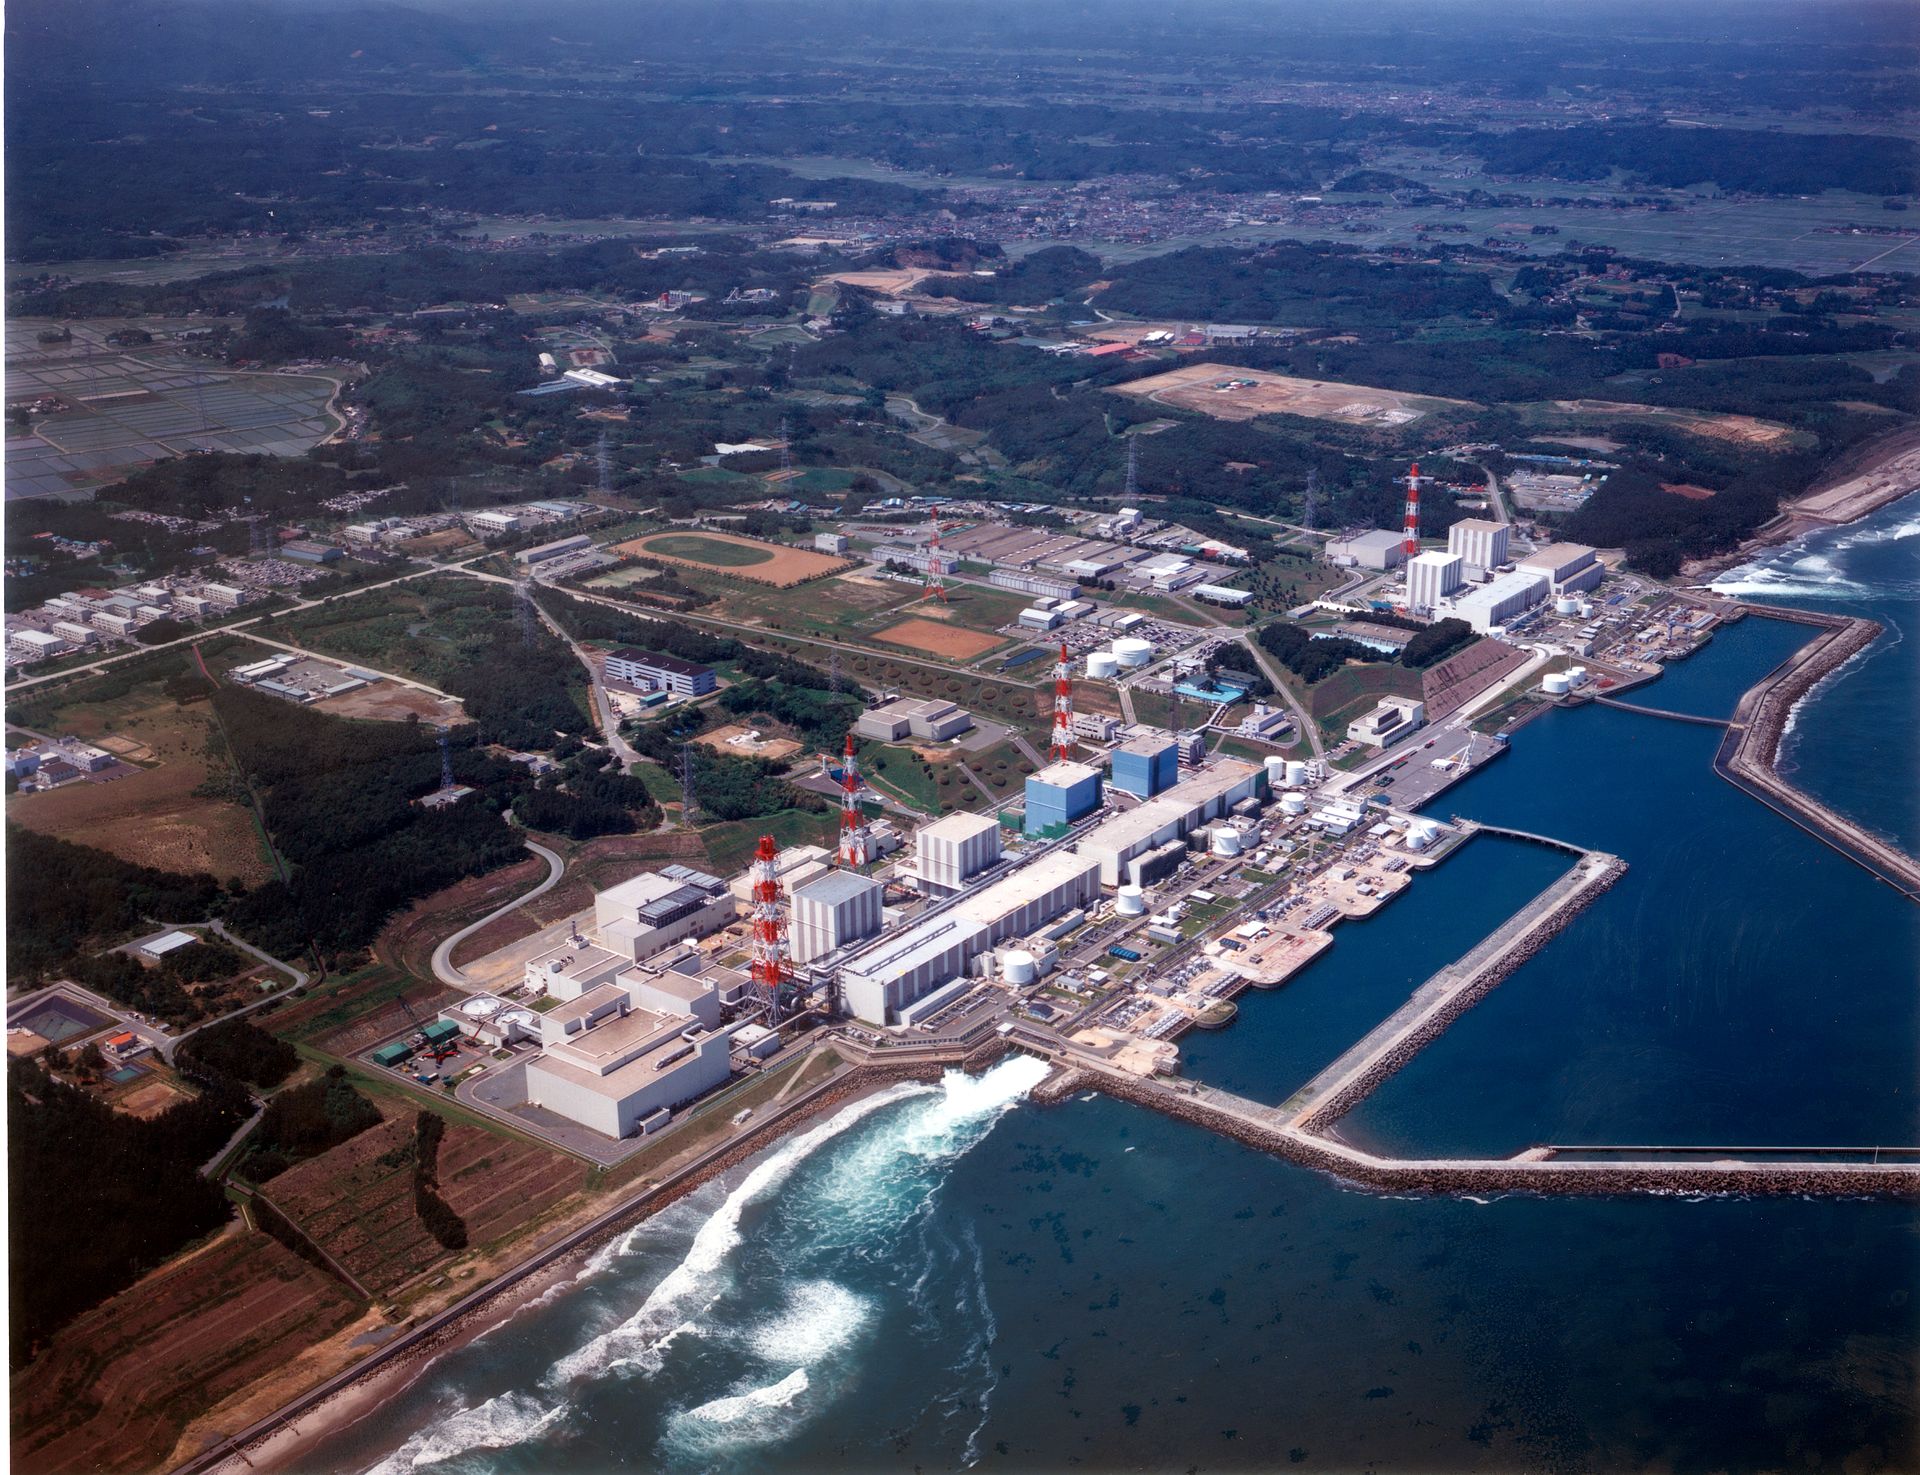 Fukushima Daiichi Nuclear Power Station